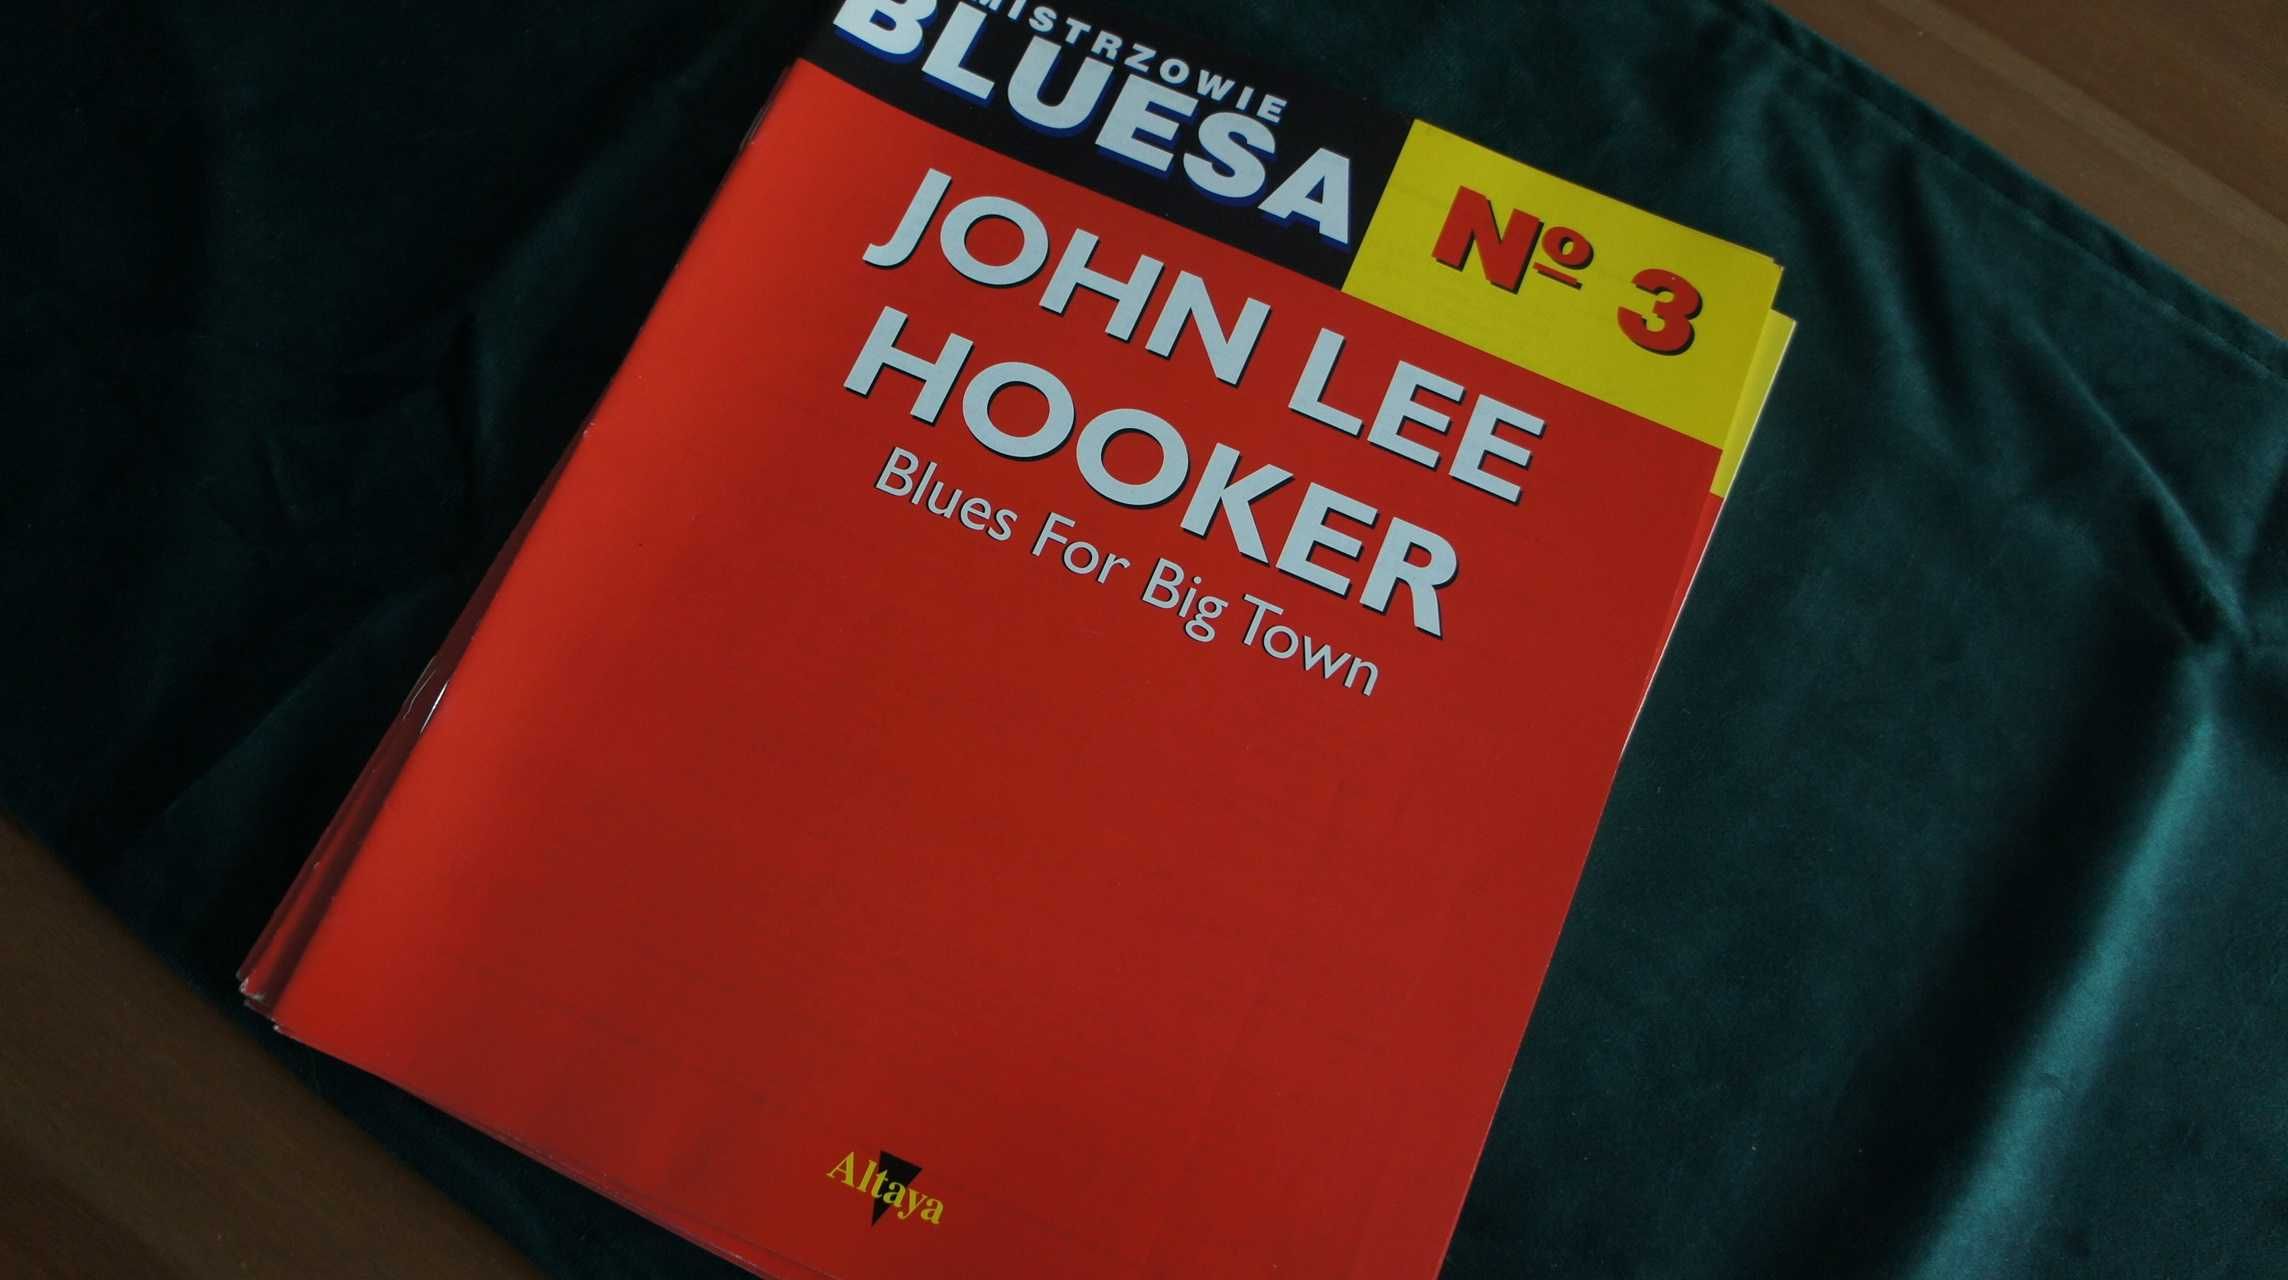 Kolekcja Mistrzowie Bluesa zeszyt + płyta CD nr. 3 JOHN LEE HOOKER